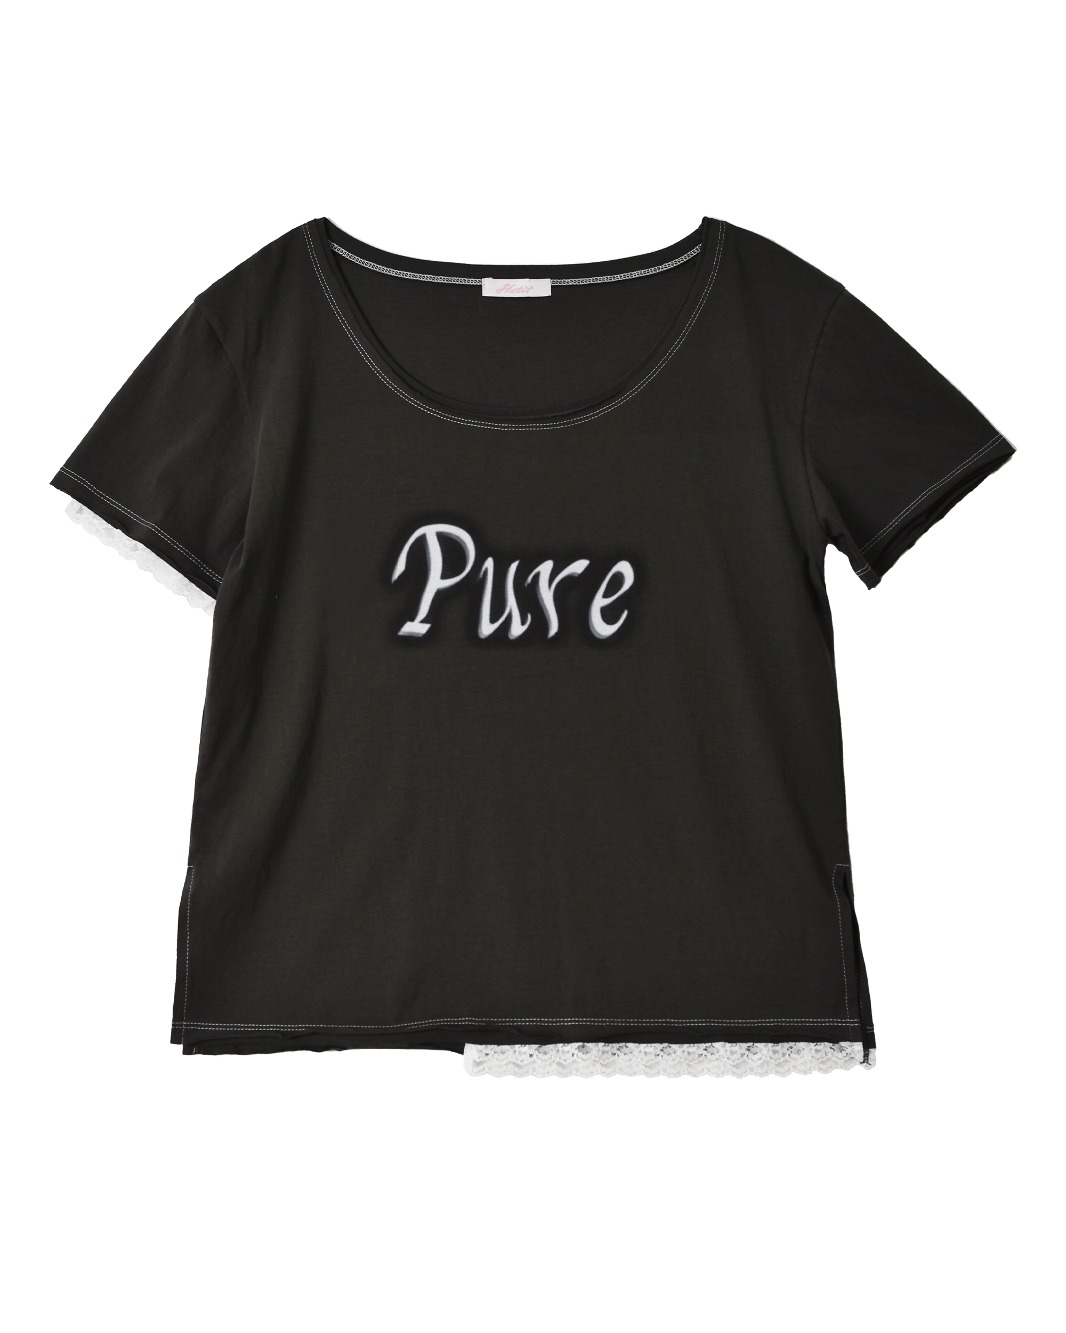 Pure Grunge T-shirt (Charcoal)